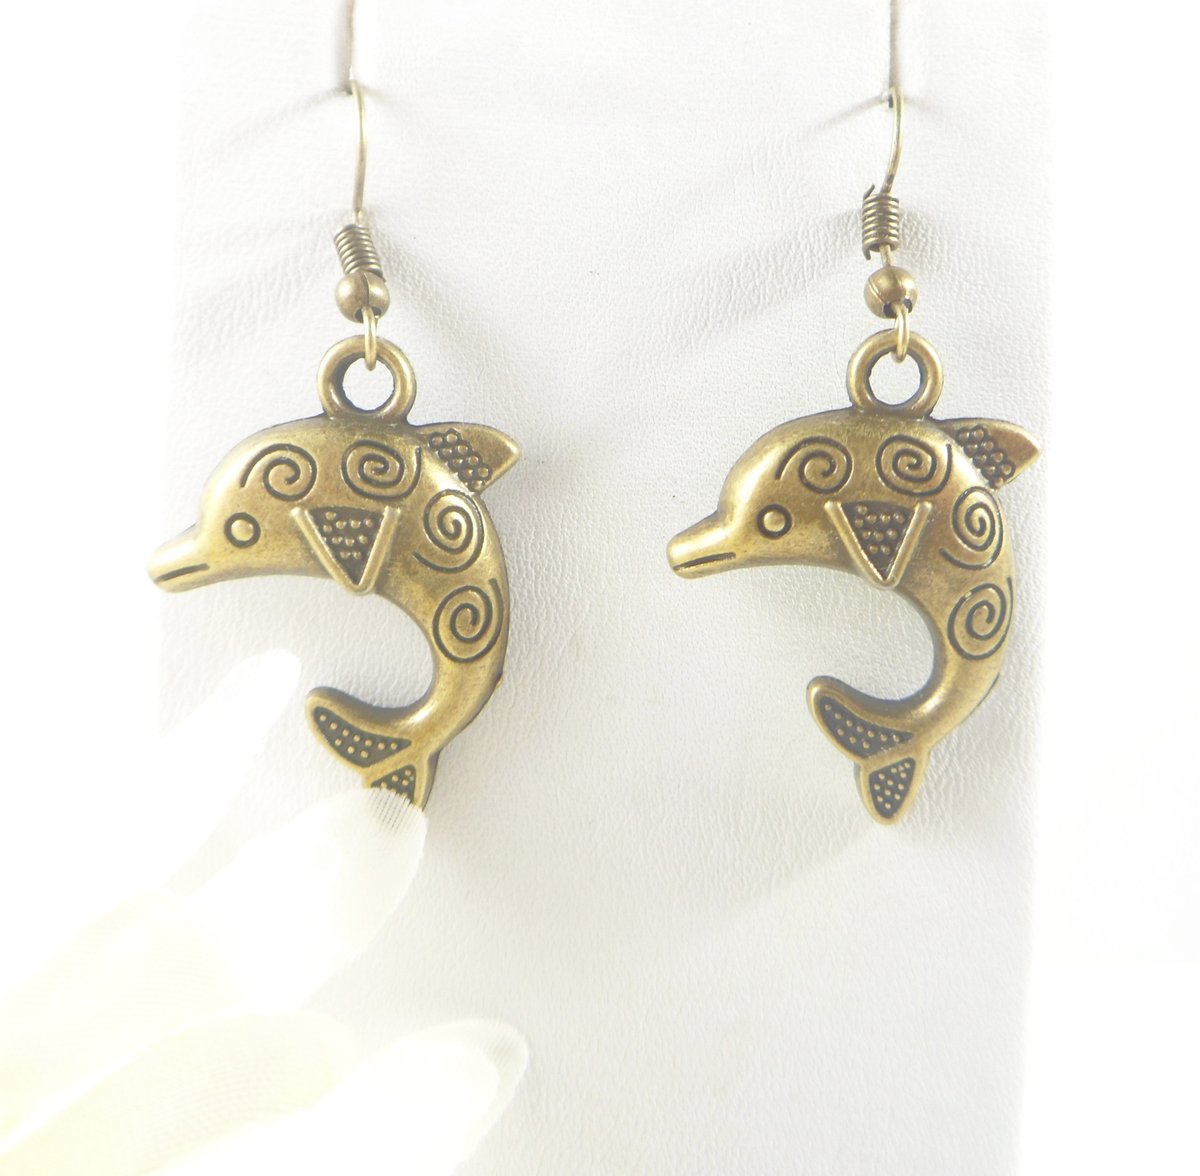 Bronze Dolphin Earrings Cute Fish Jewelry Trending Now Teen Dolphin Jewelry Ocean Sea Boho Chic Earrings Porpoise Earrings Marine Jewelry tuppu.net/13b9523d #EtsyShop #SantaFe #EtsySeller #NewMexico #GiftsUnder10